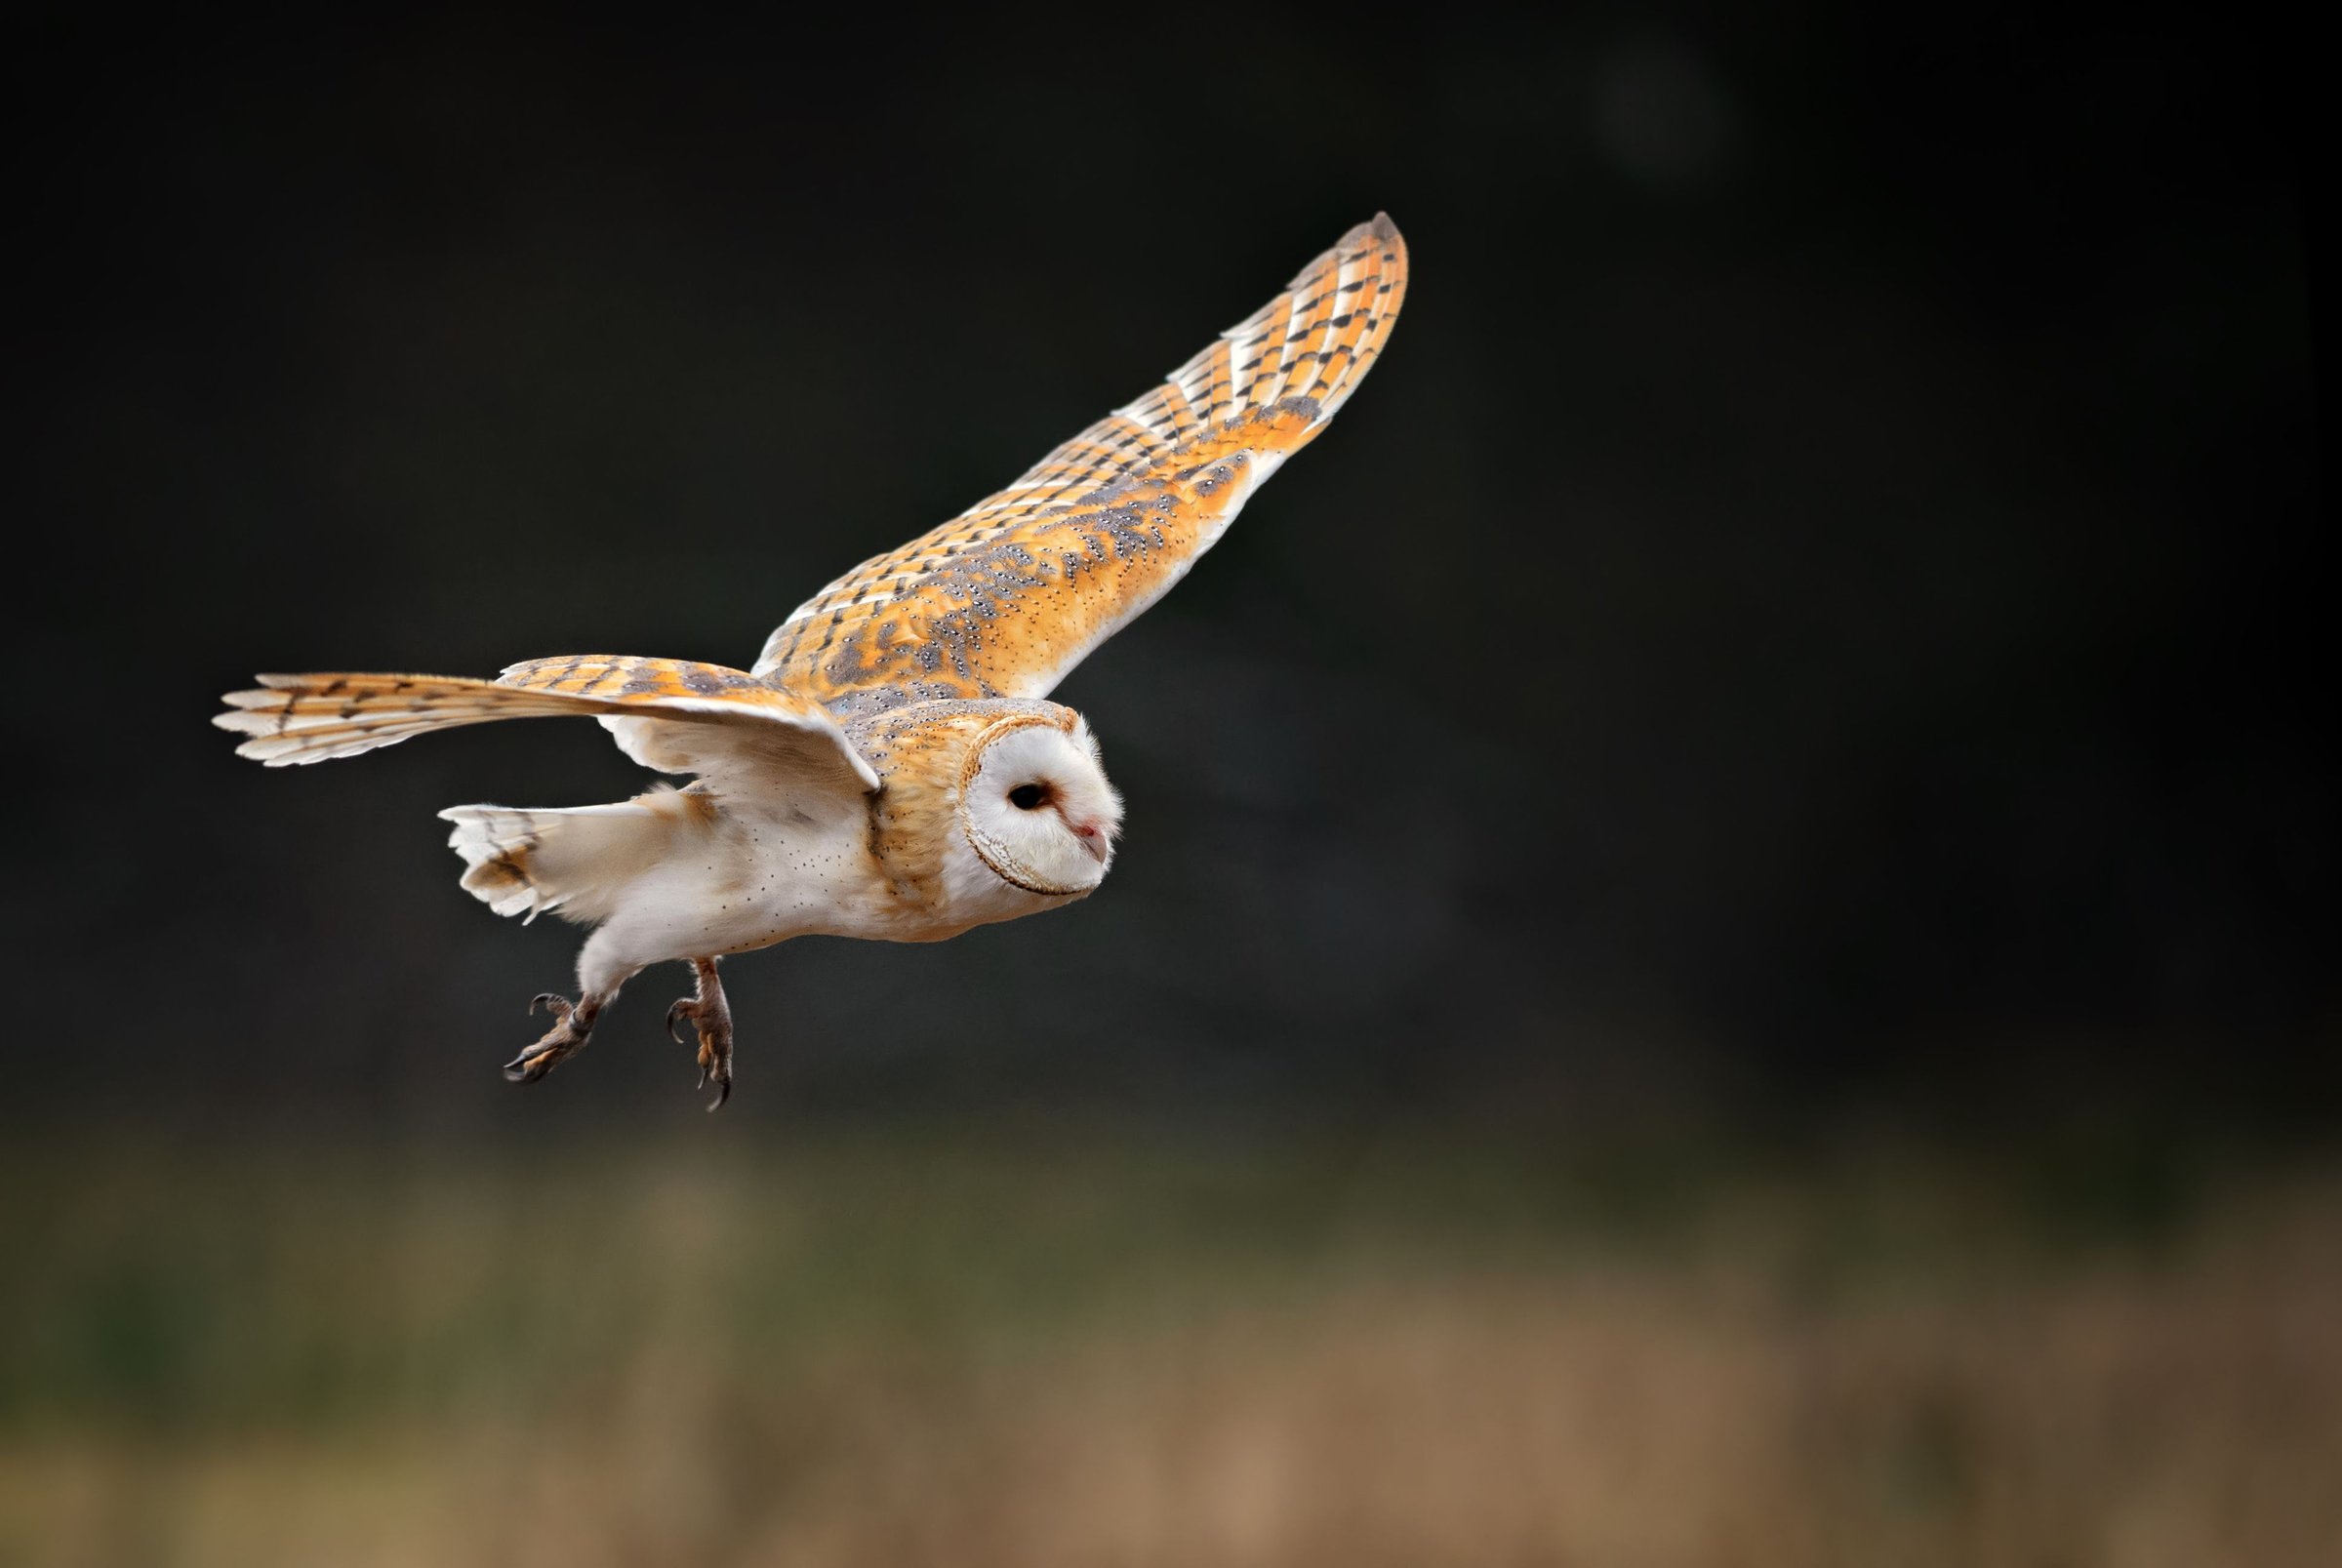 January star species: The Barn Owl